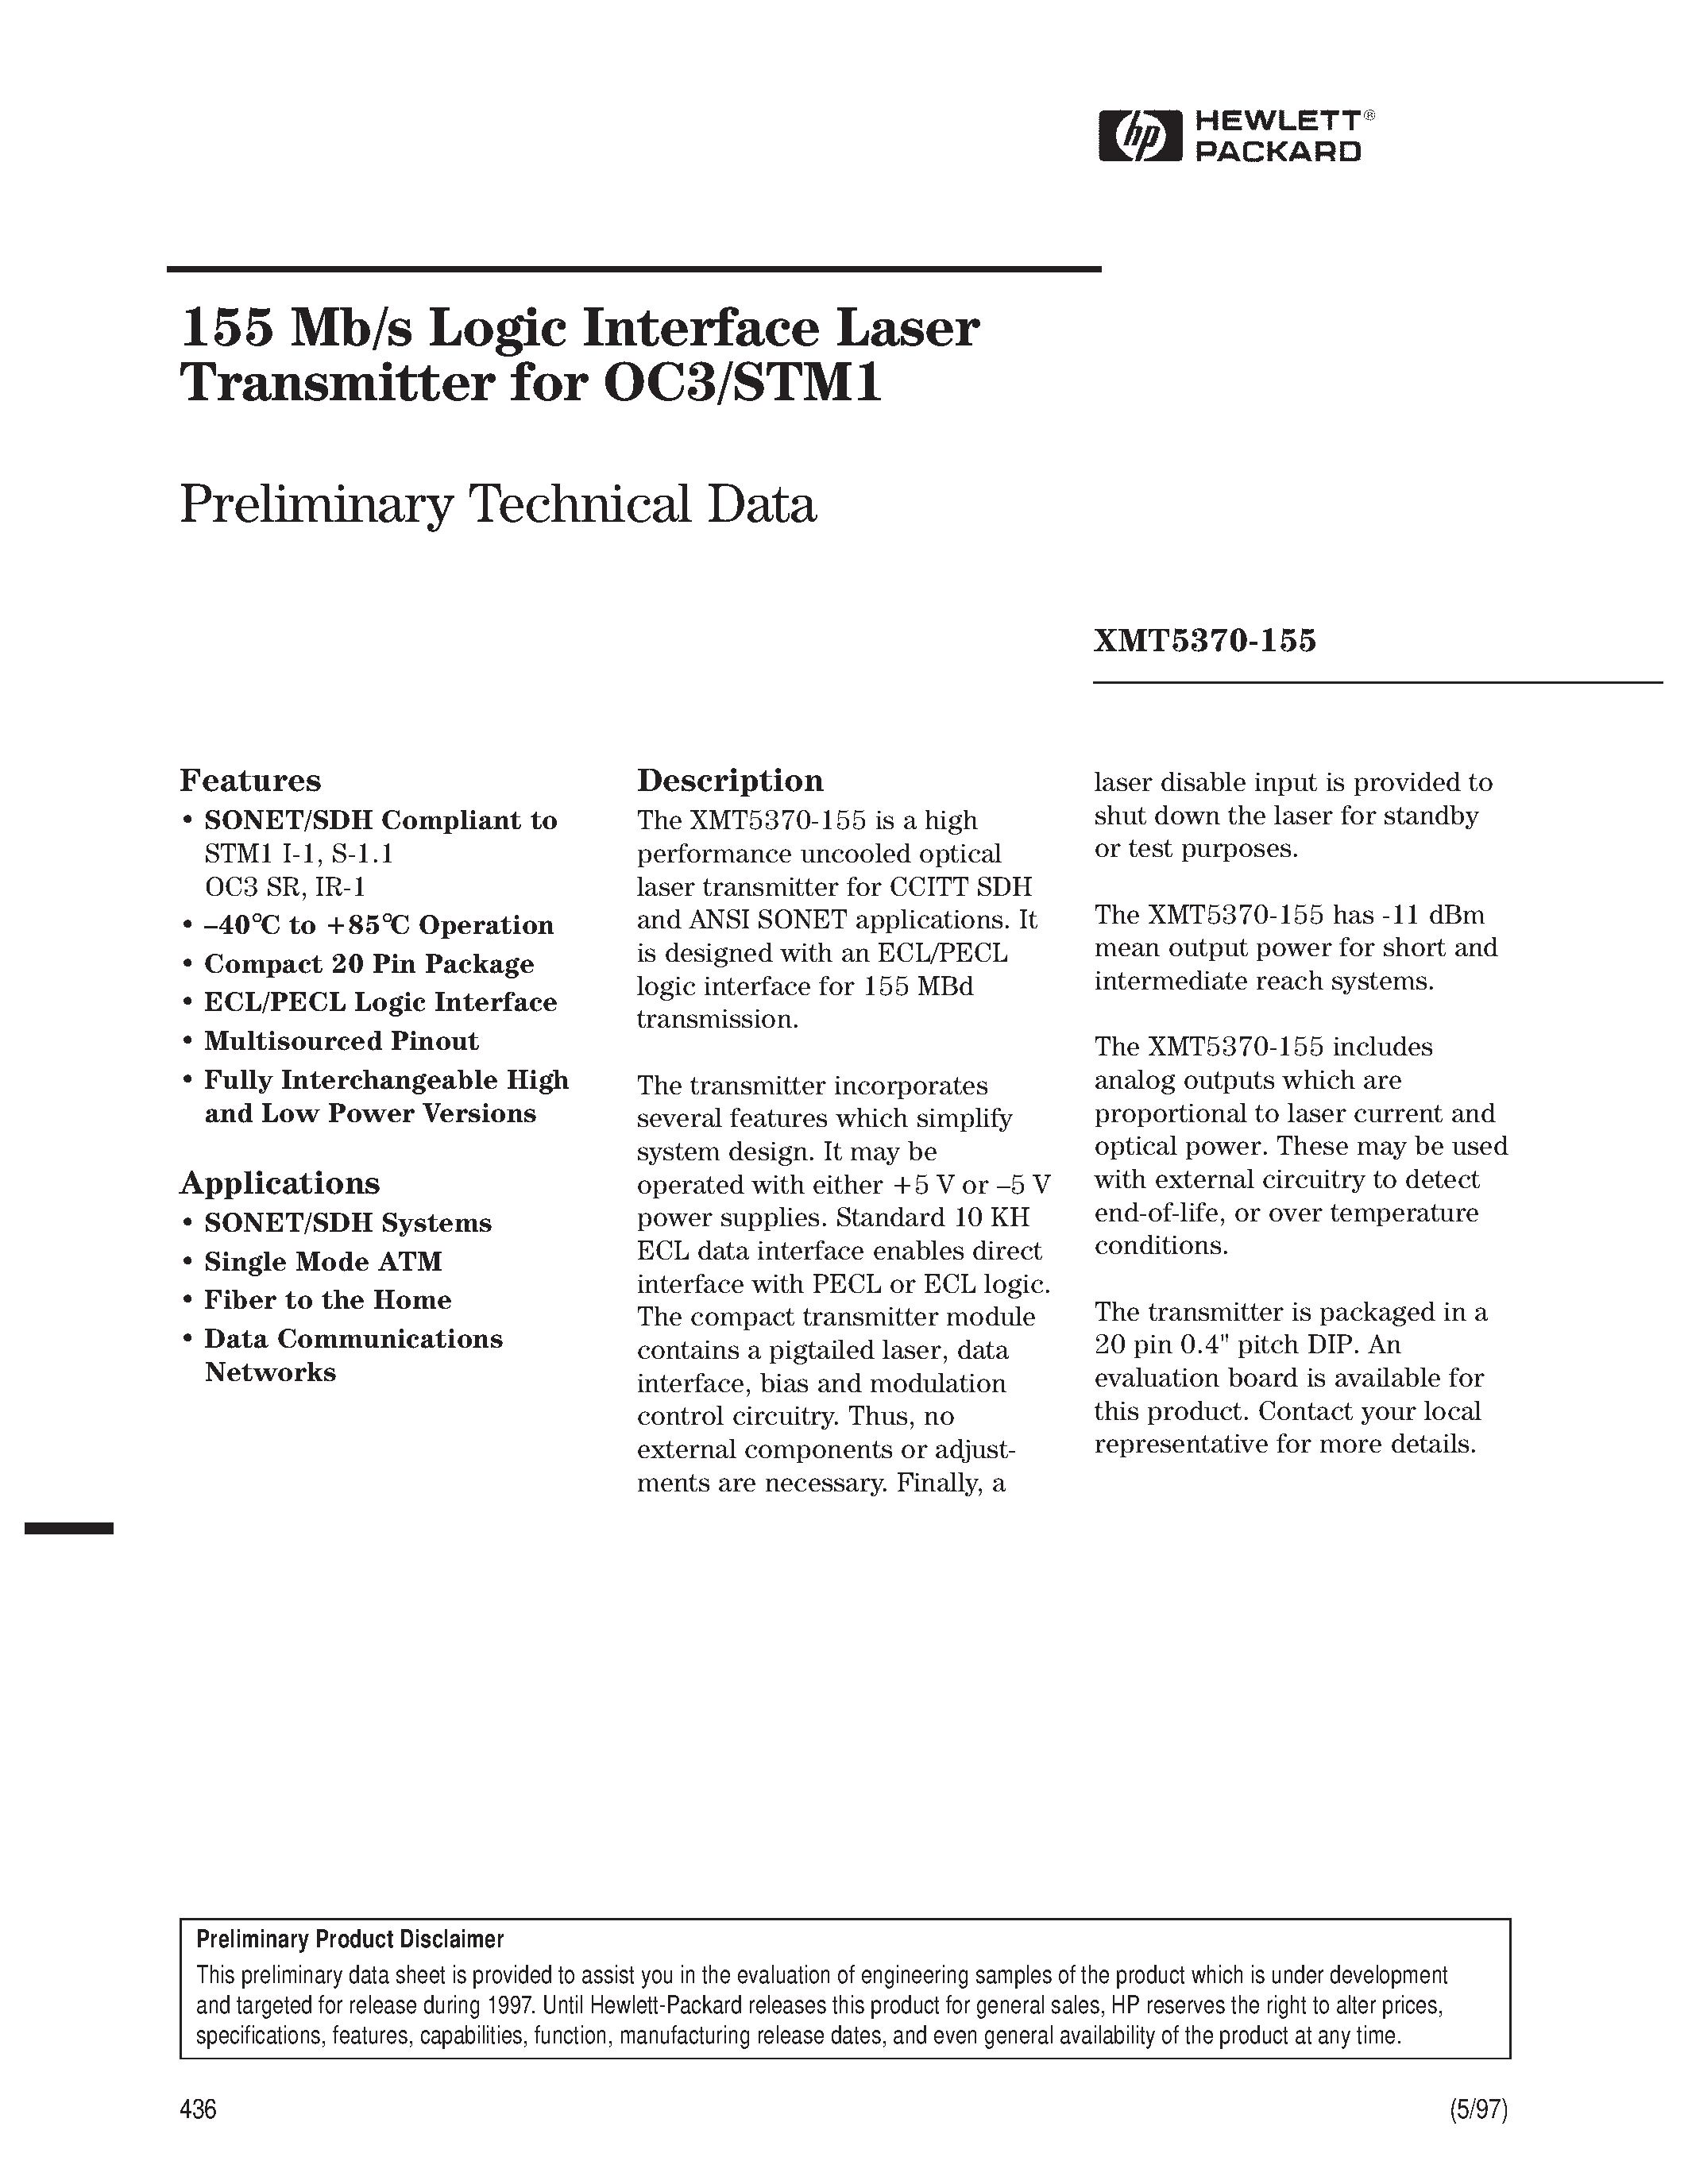 Datasheet XMT5370B-155-FP - 155 Mb/s Logic Interface Laser Transmitter for OC3/STM1 page 1